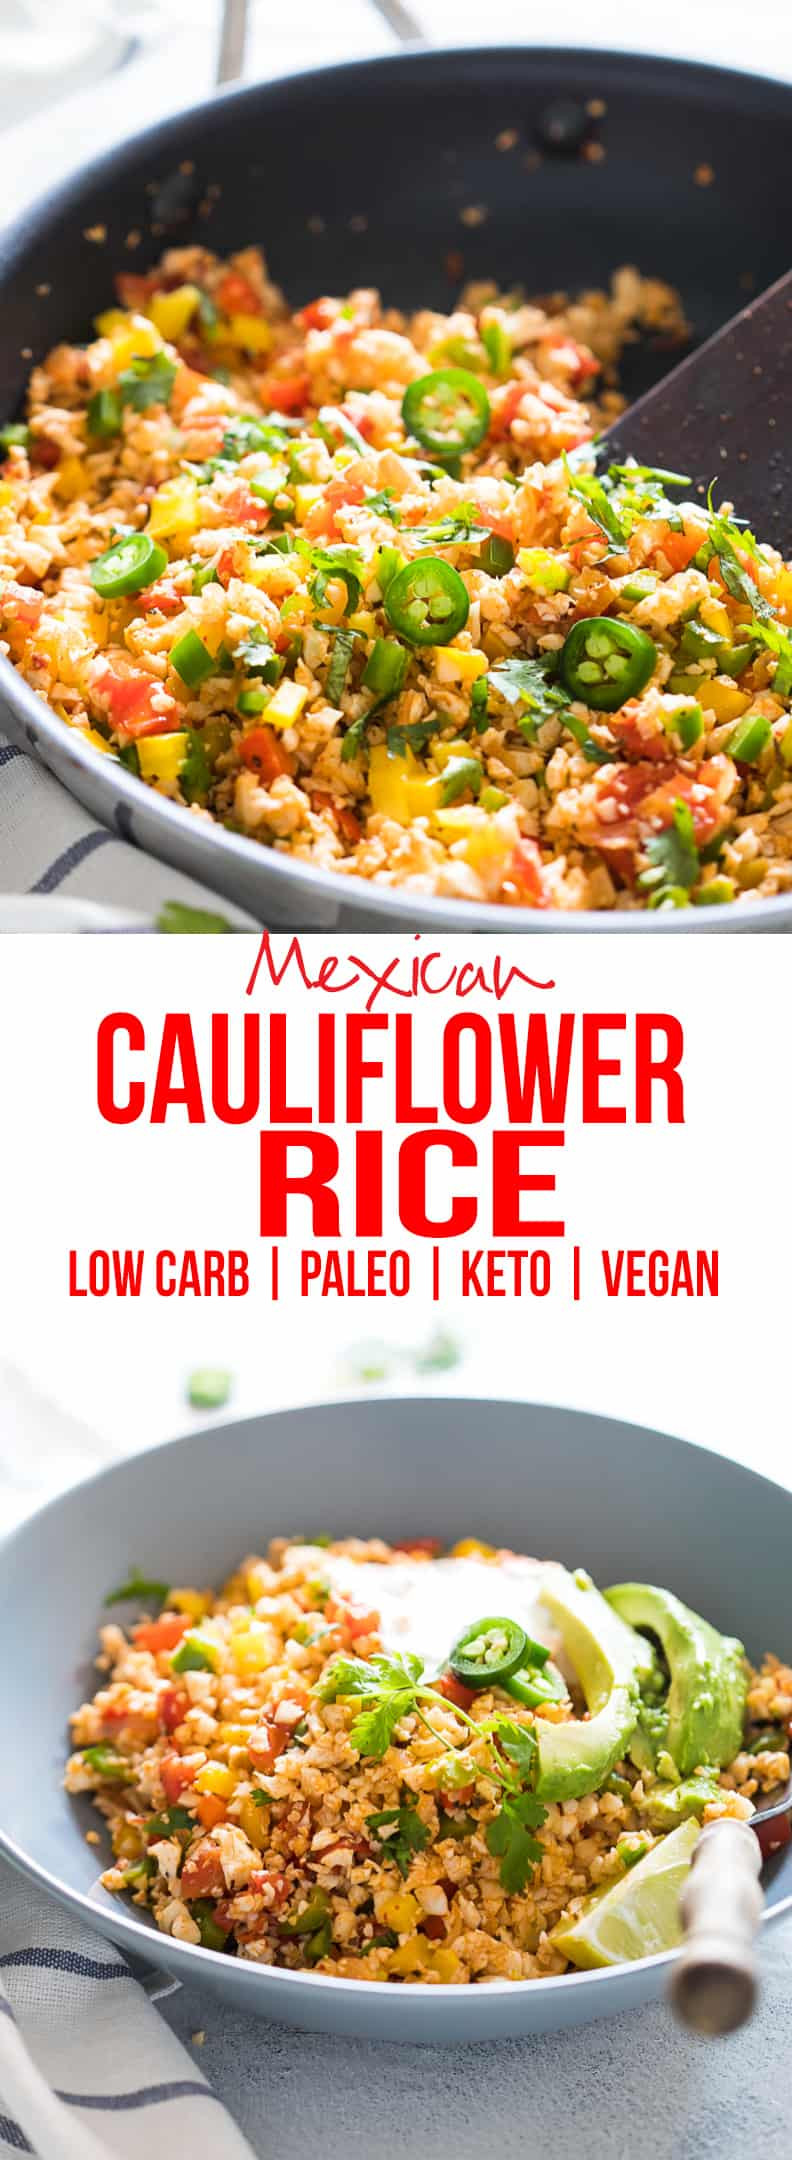 Vegan Keto Cauliflower Recipes
 Low Carb Mexican Cauliflower Rice Paleo Vegan Keto